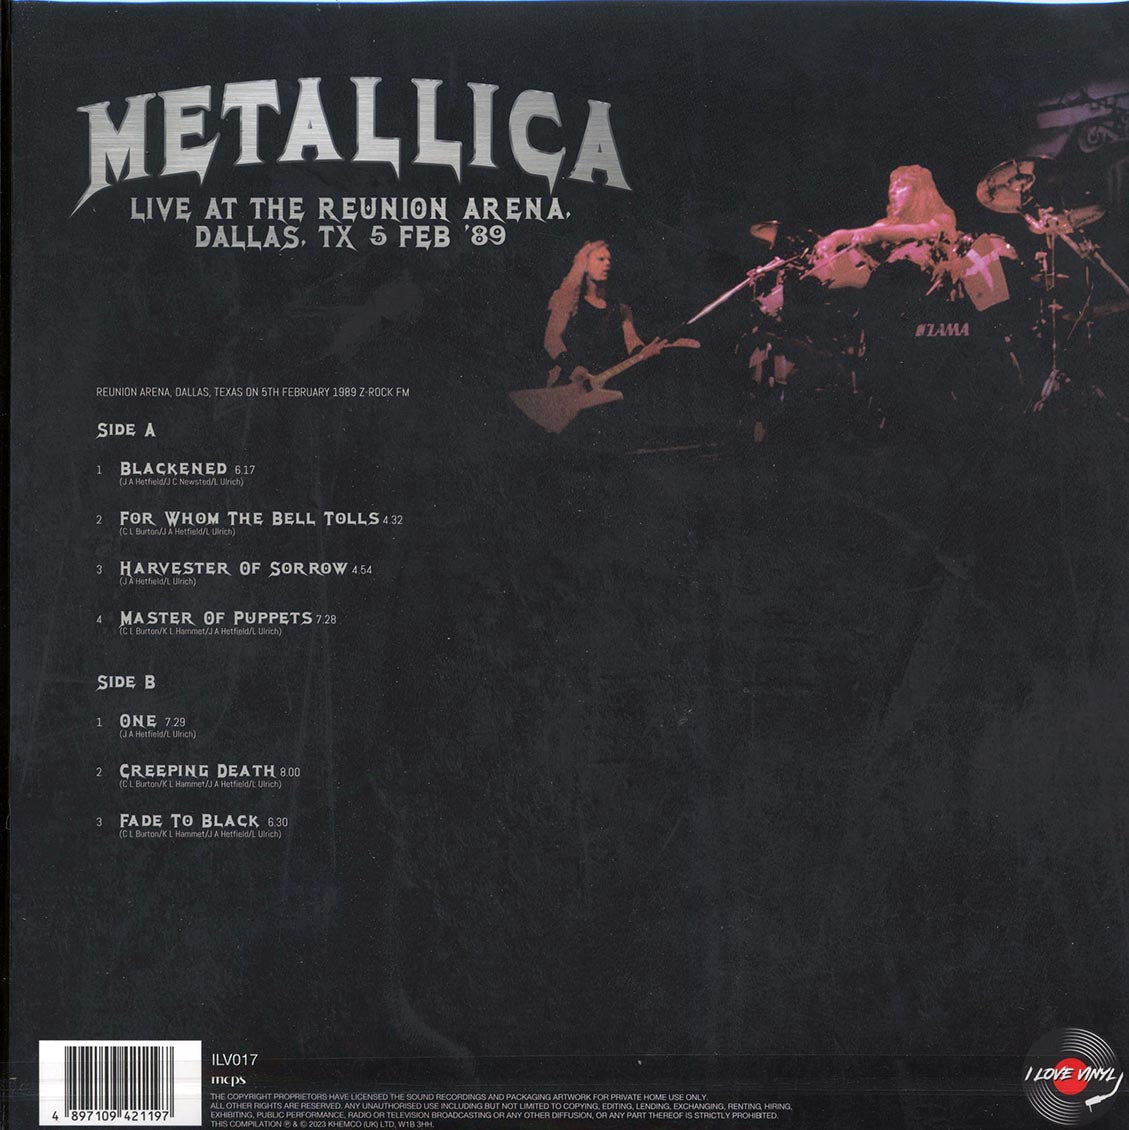 Metallica - Live At The Reunion Arena, Dallas TX 5 Feb '89 (180g) - Vinyl LP, LP